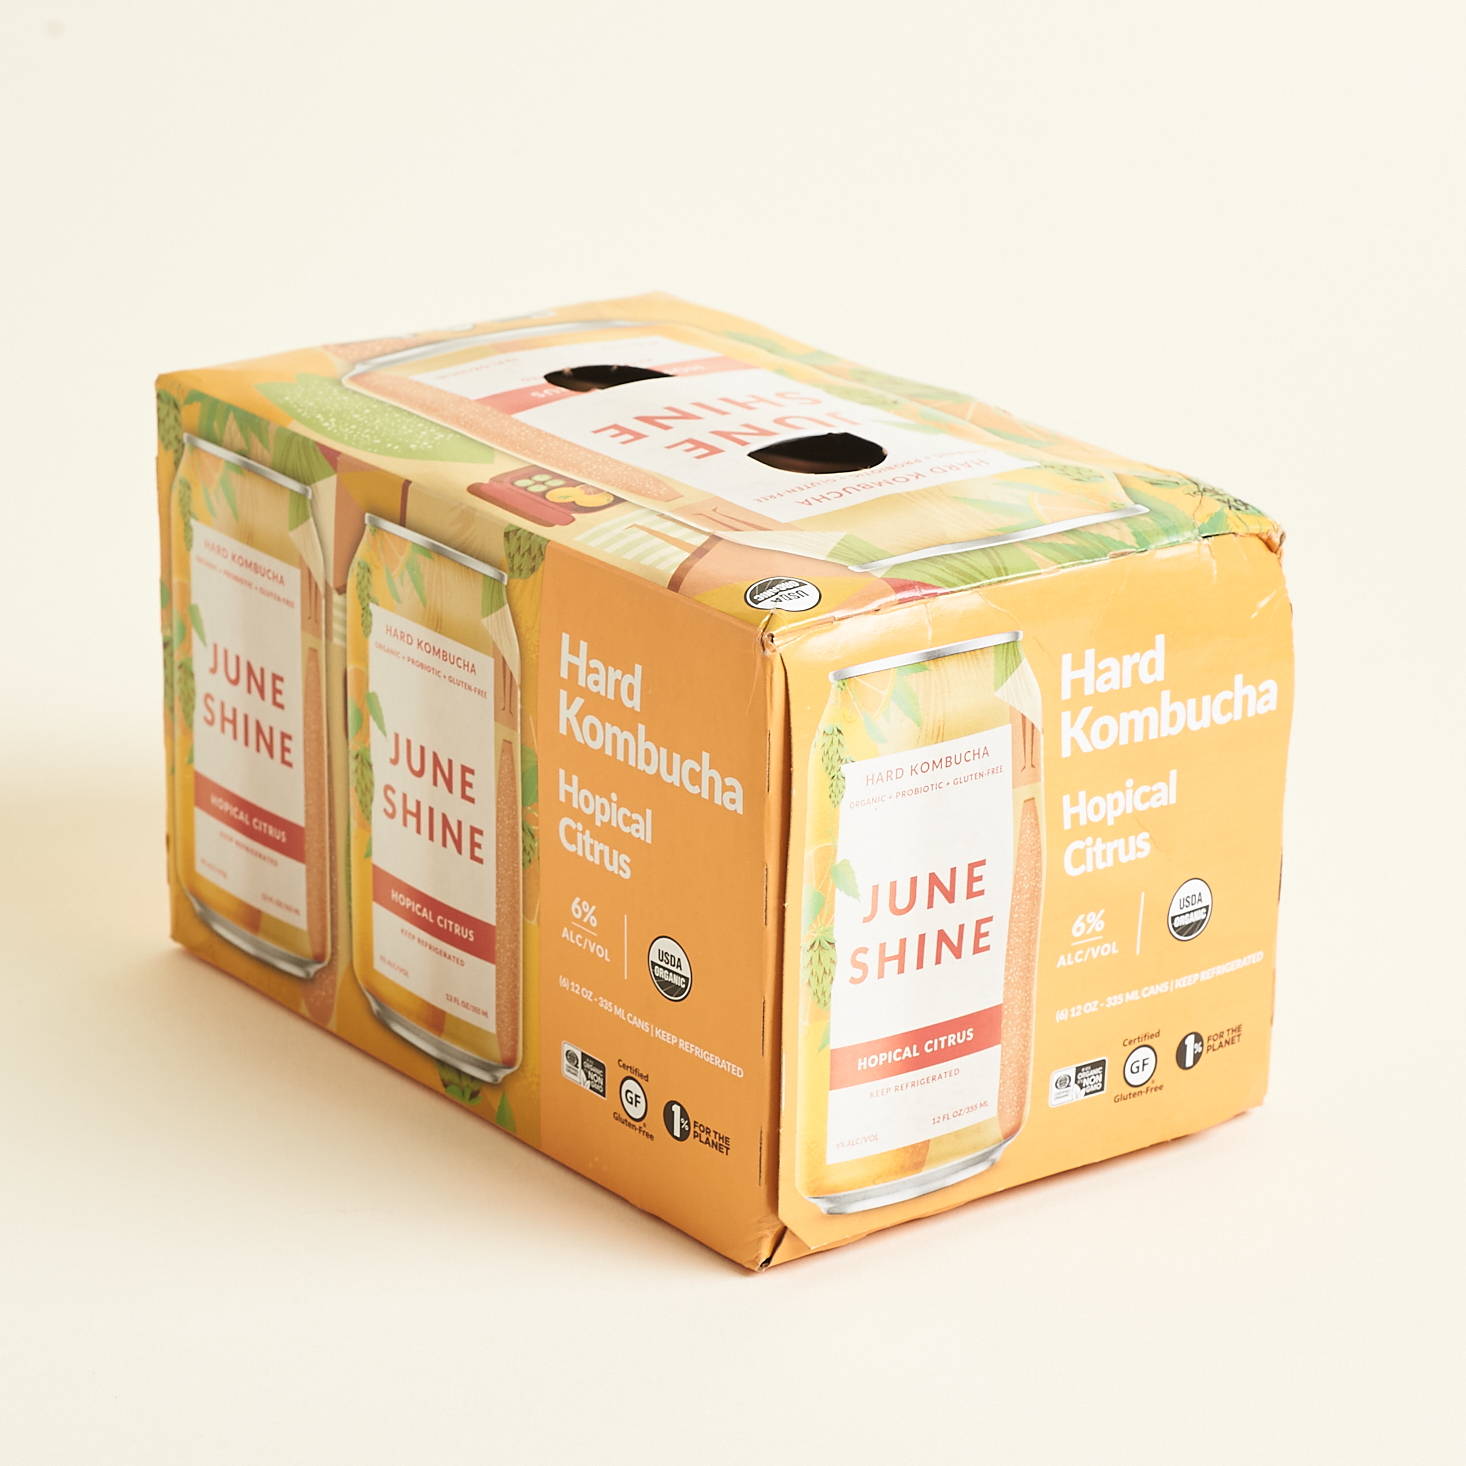 Box Front of Hopical Citrus for JuneShine Sampler Pack